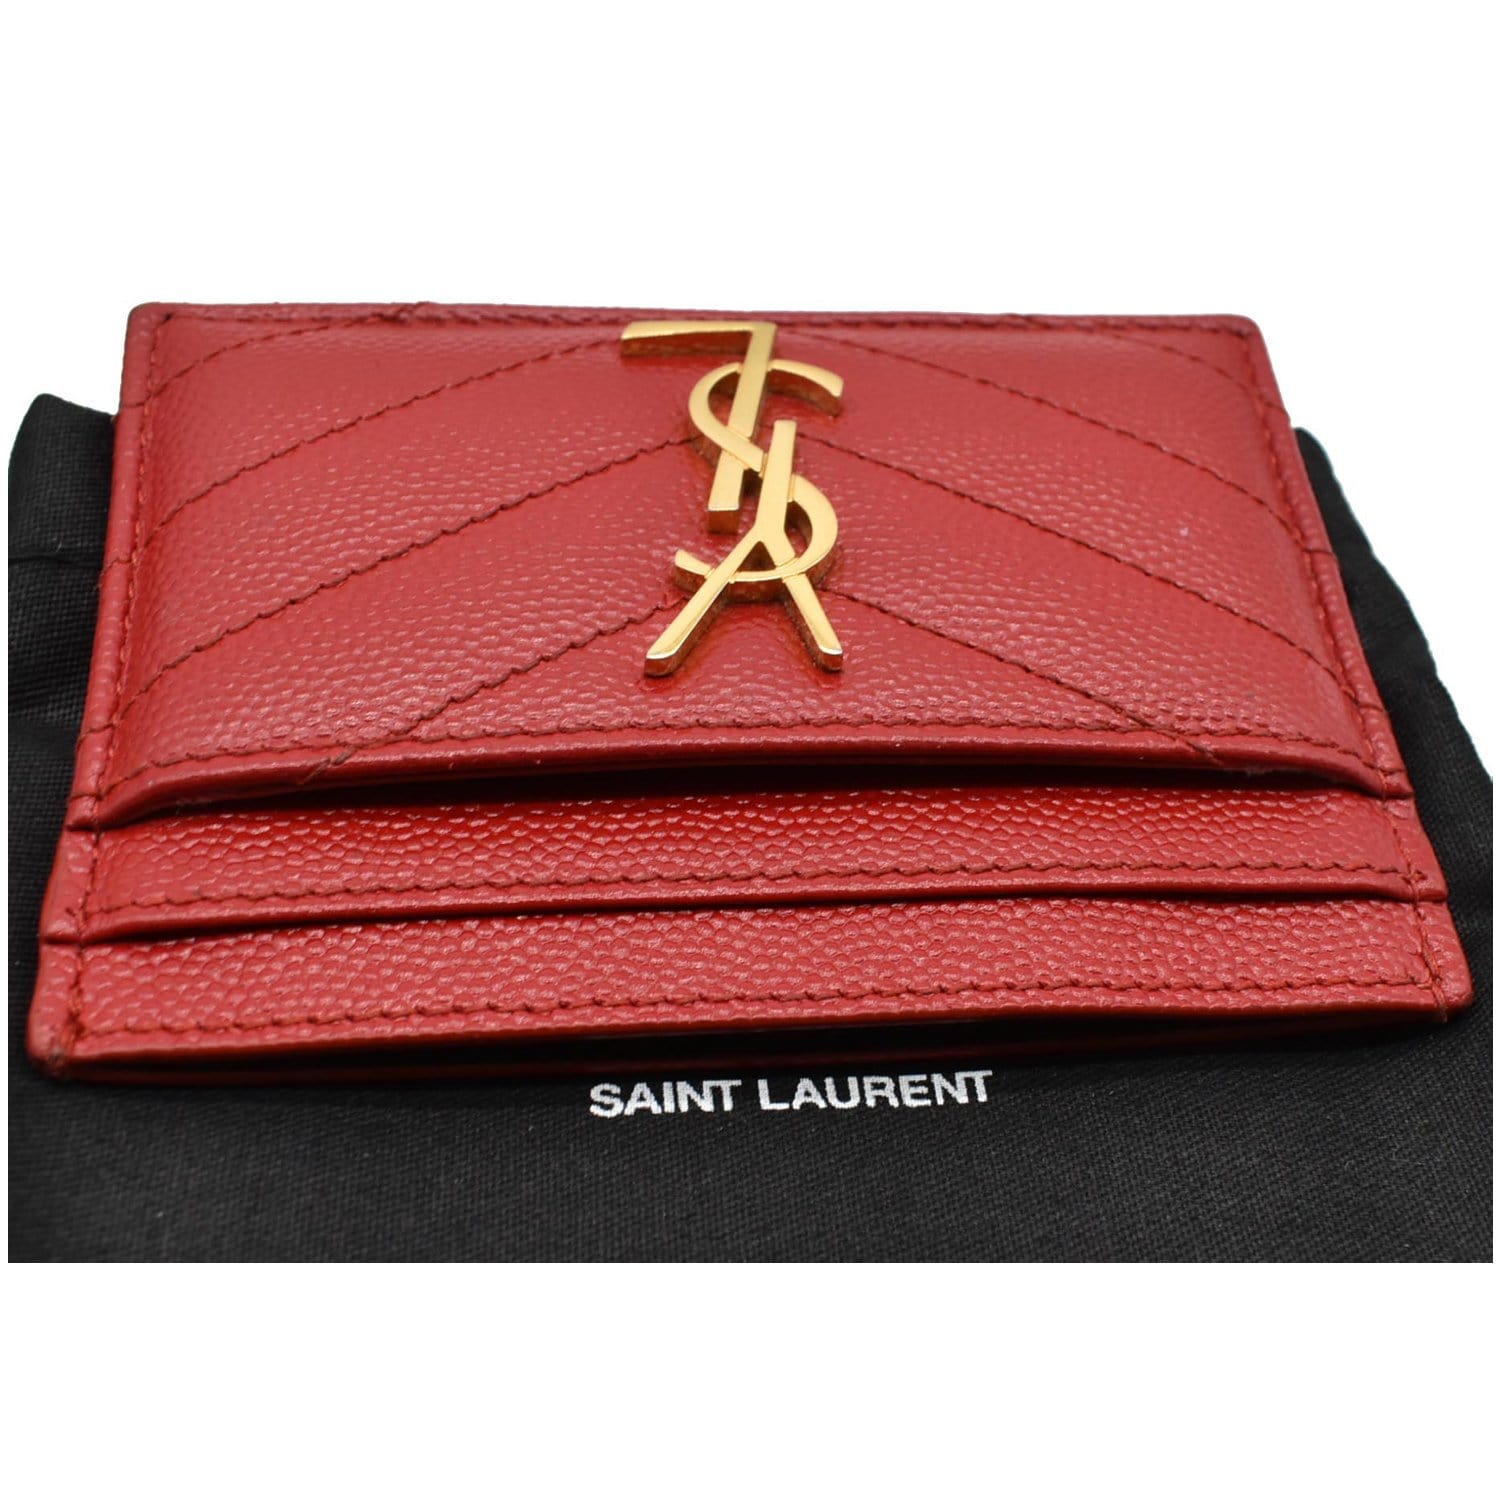 YVES SAINT LAURENT passport case Red leather Rare Monogram from